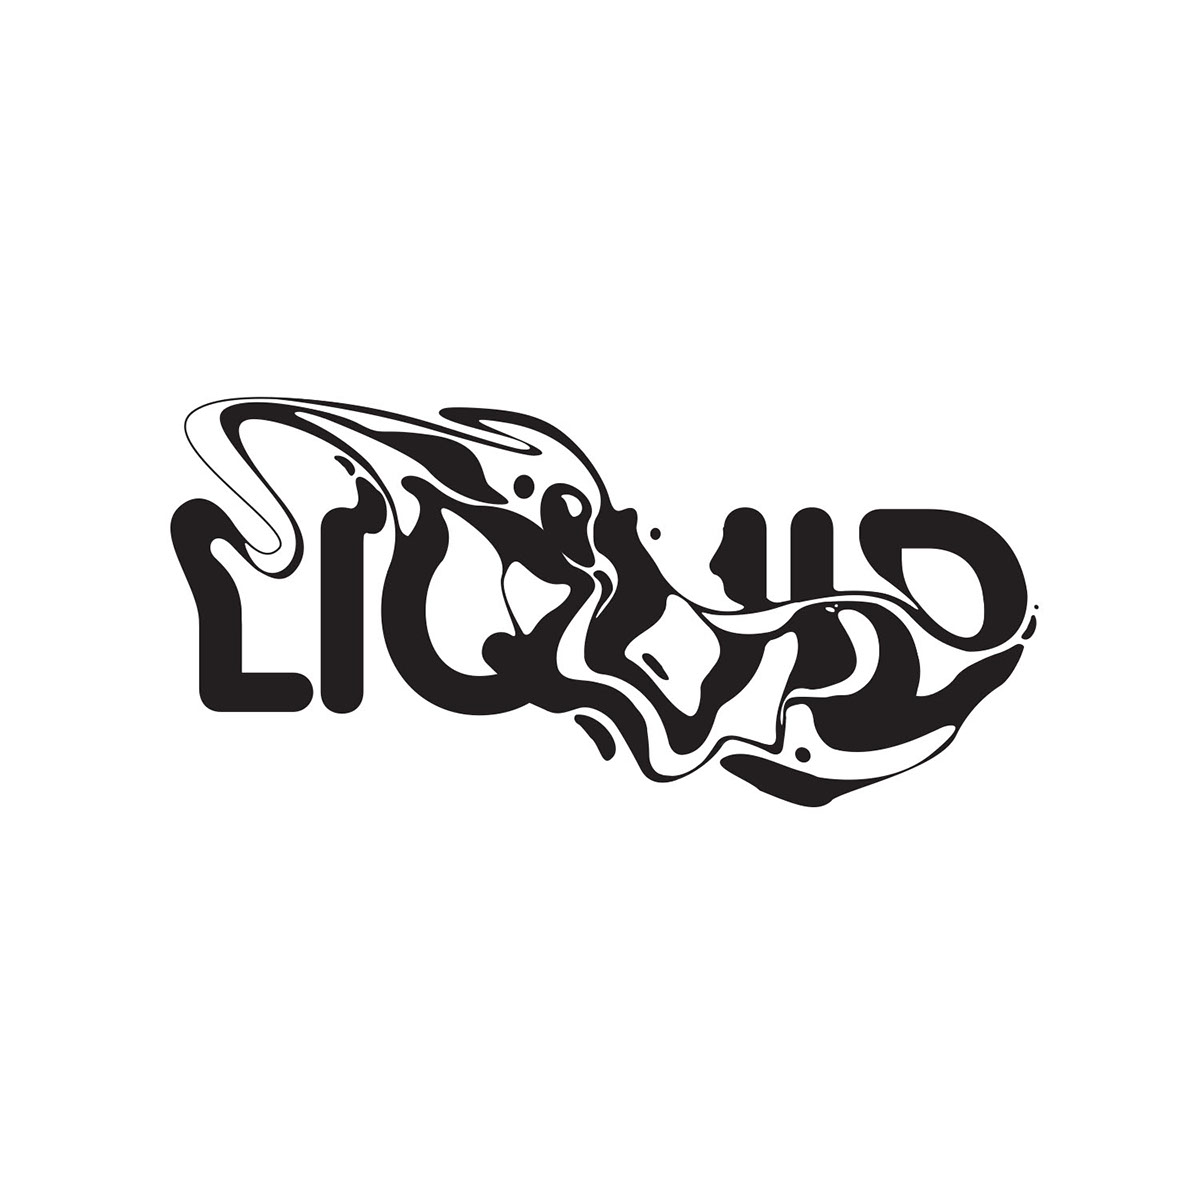 typelyfe lucas Young Toronto instagram lettering handtype Illustrative Type Quotes